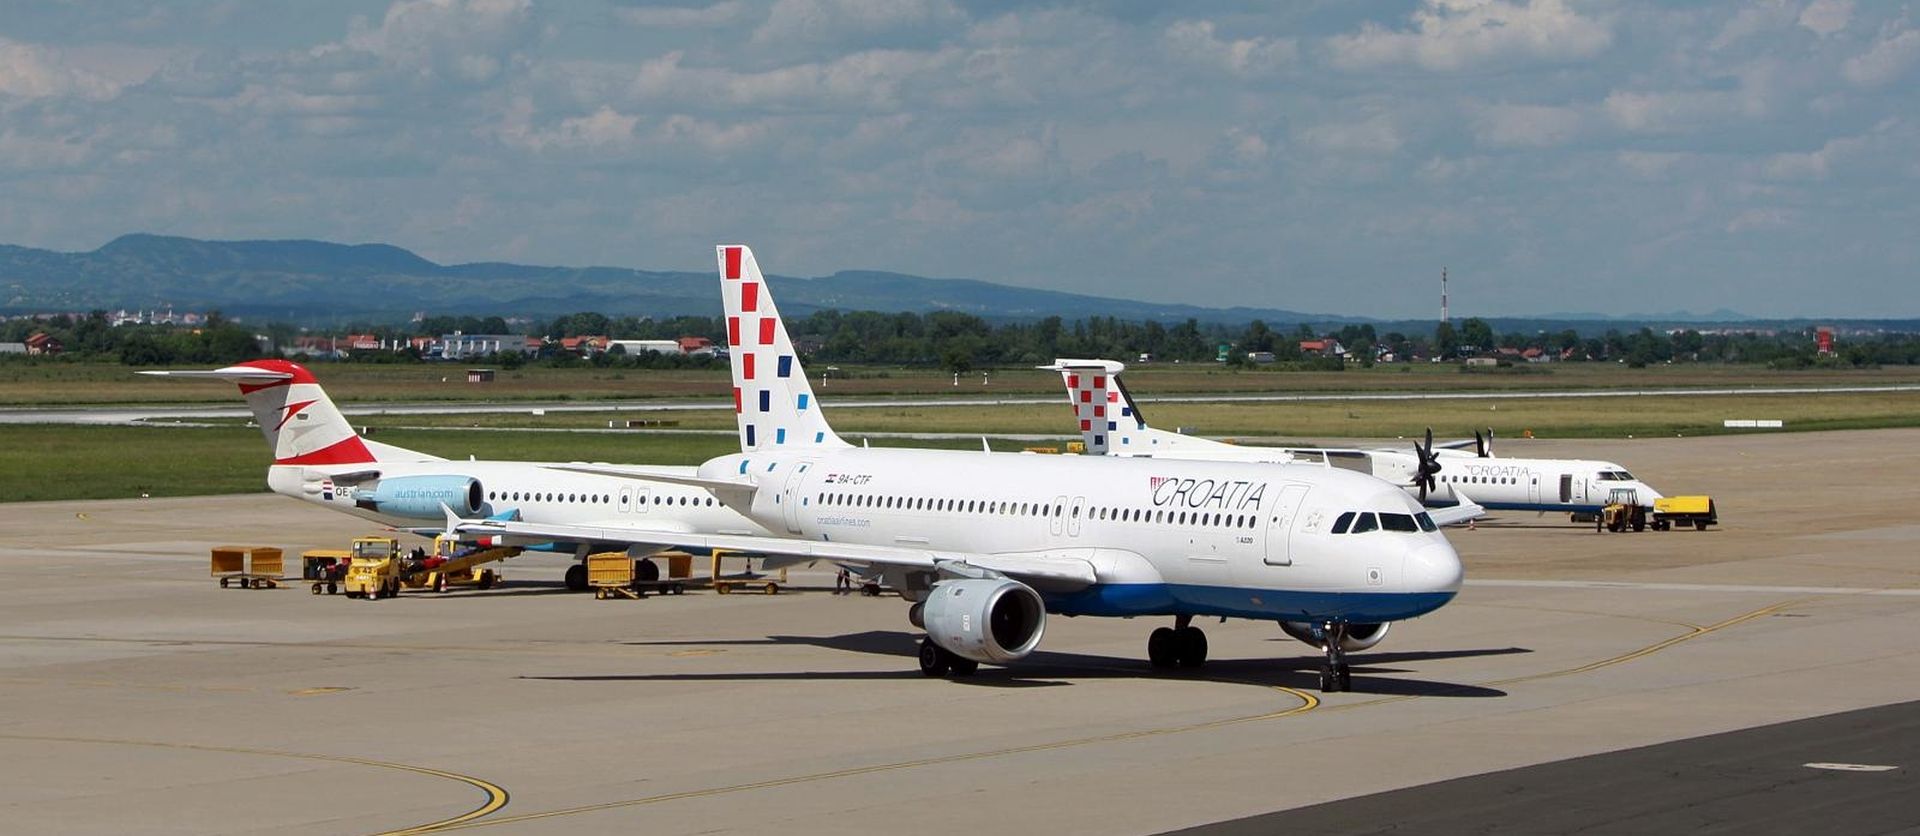 22.05.2013., Zracna luka Zagreb, Zagreb - Polijetanje zrakoplova Airbus A320 kompanije Croatia Airlines. 
Photo: Borna Filic/PIXSELL